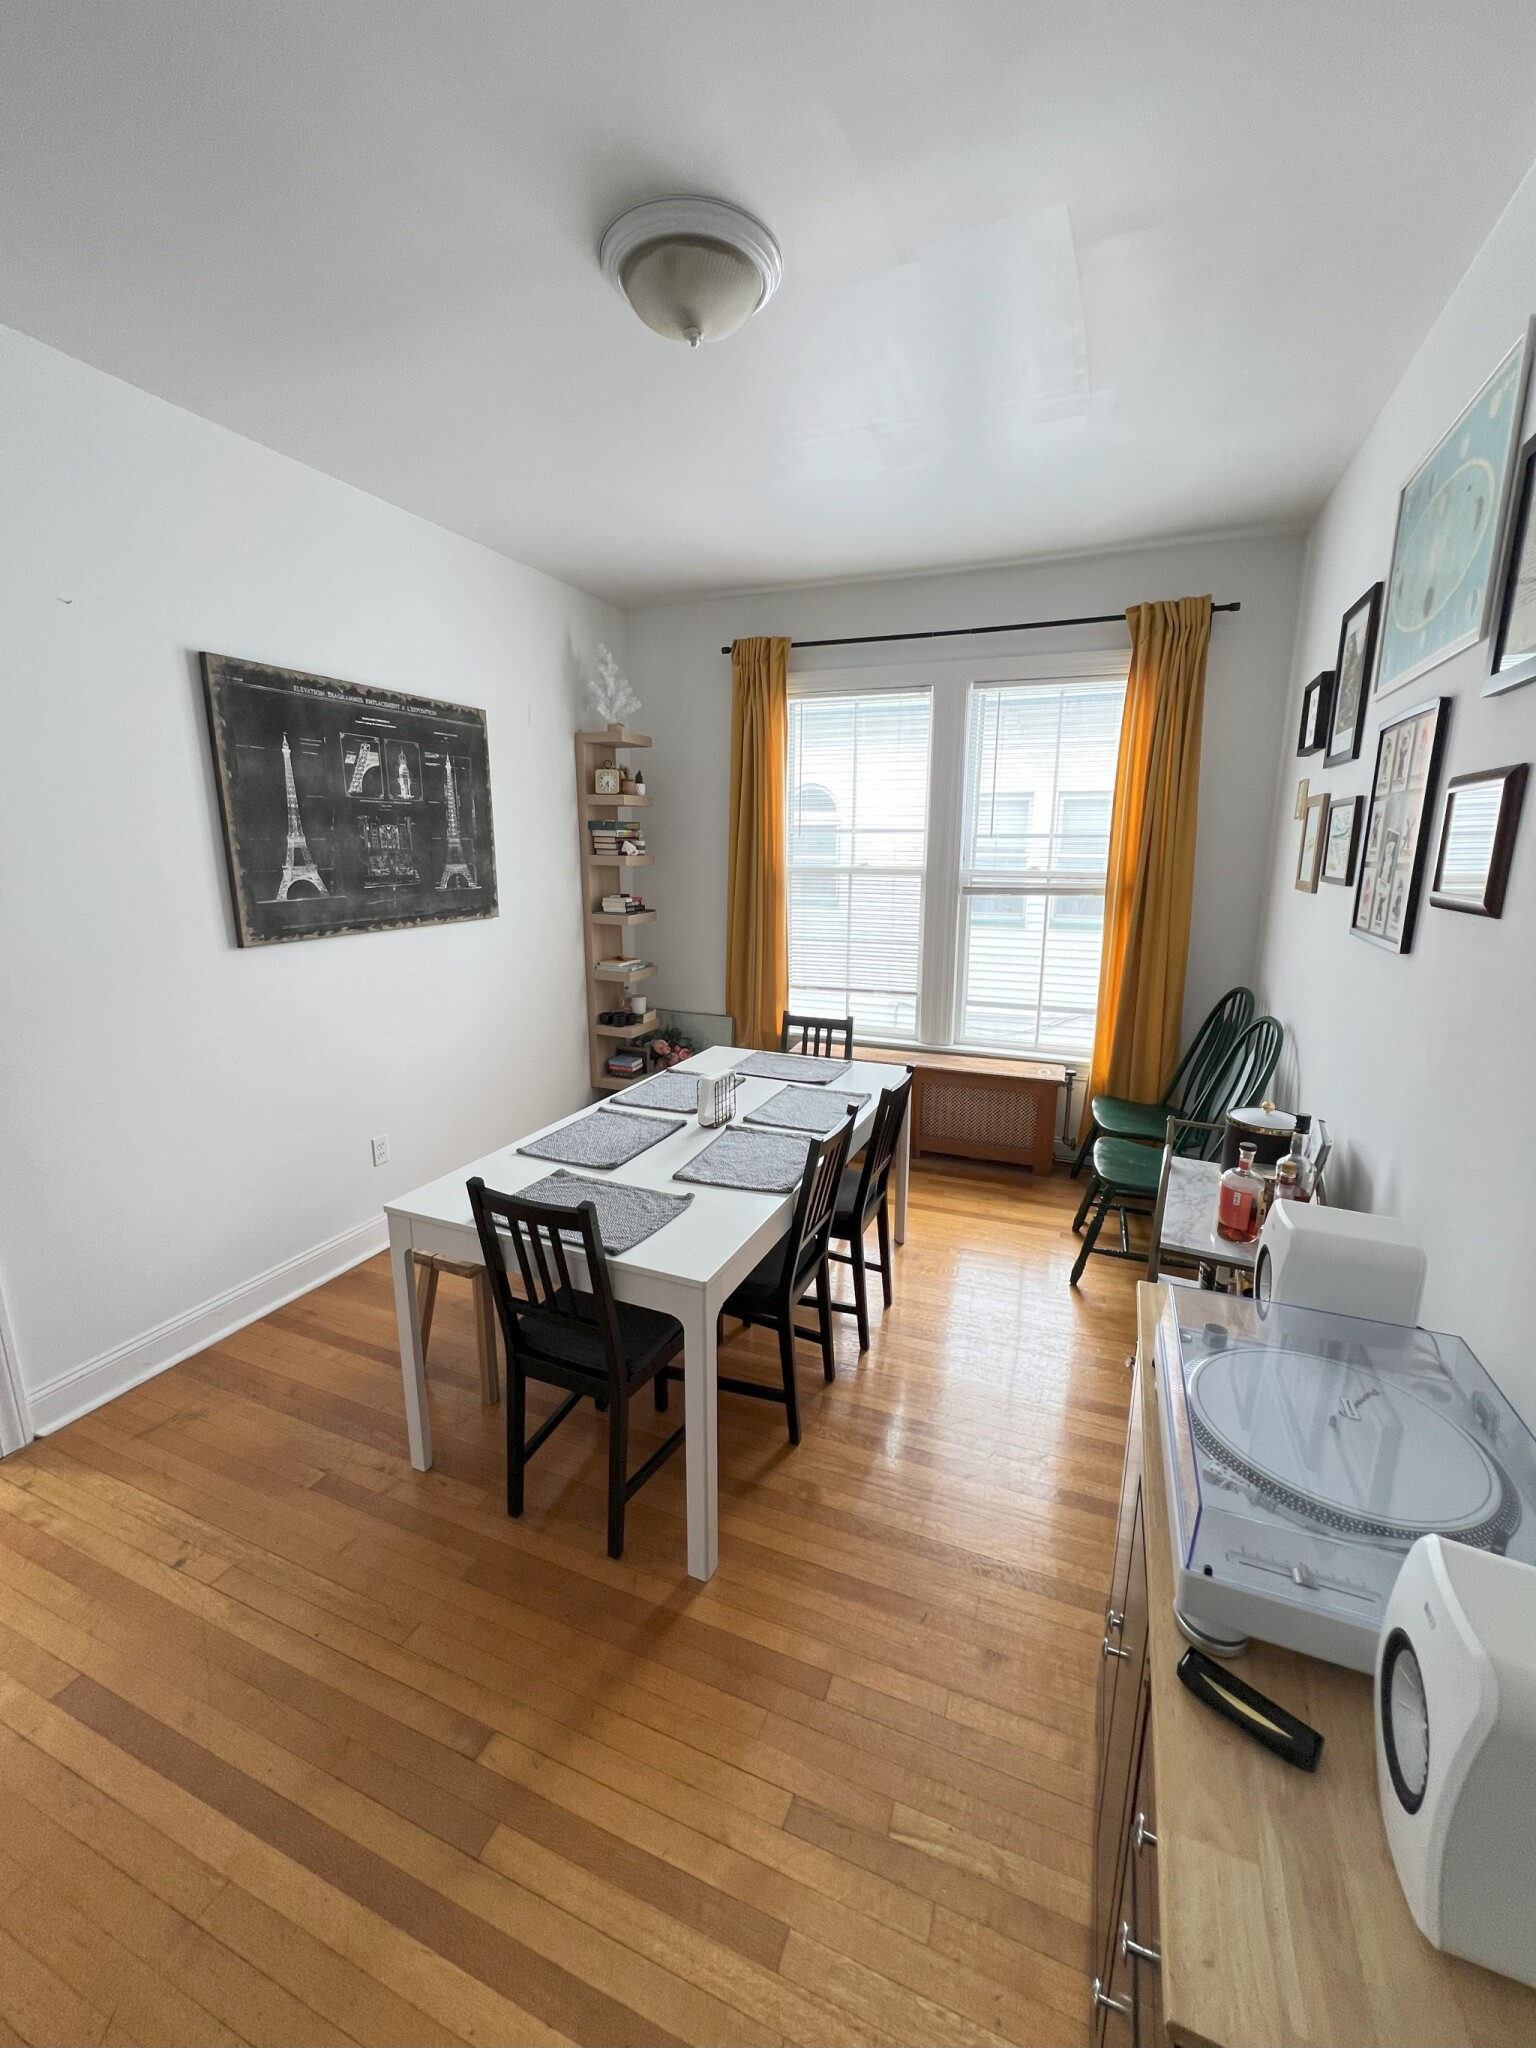 Photos of apartment on Windsor St.,Cambridge MA 02141